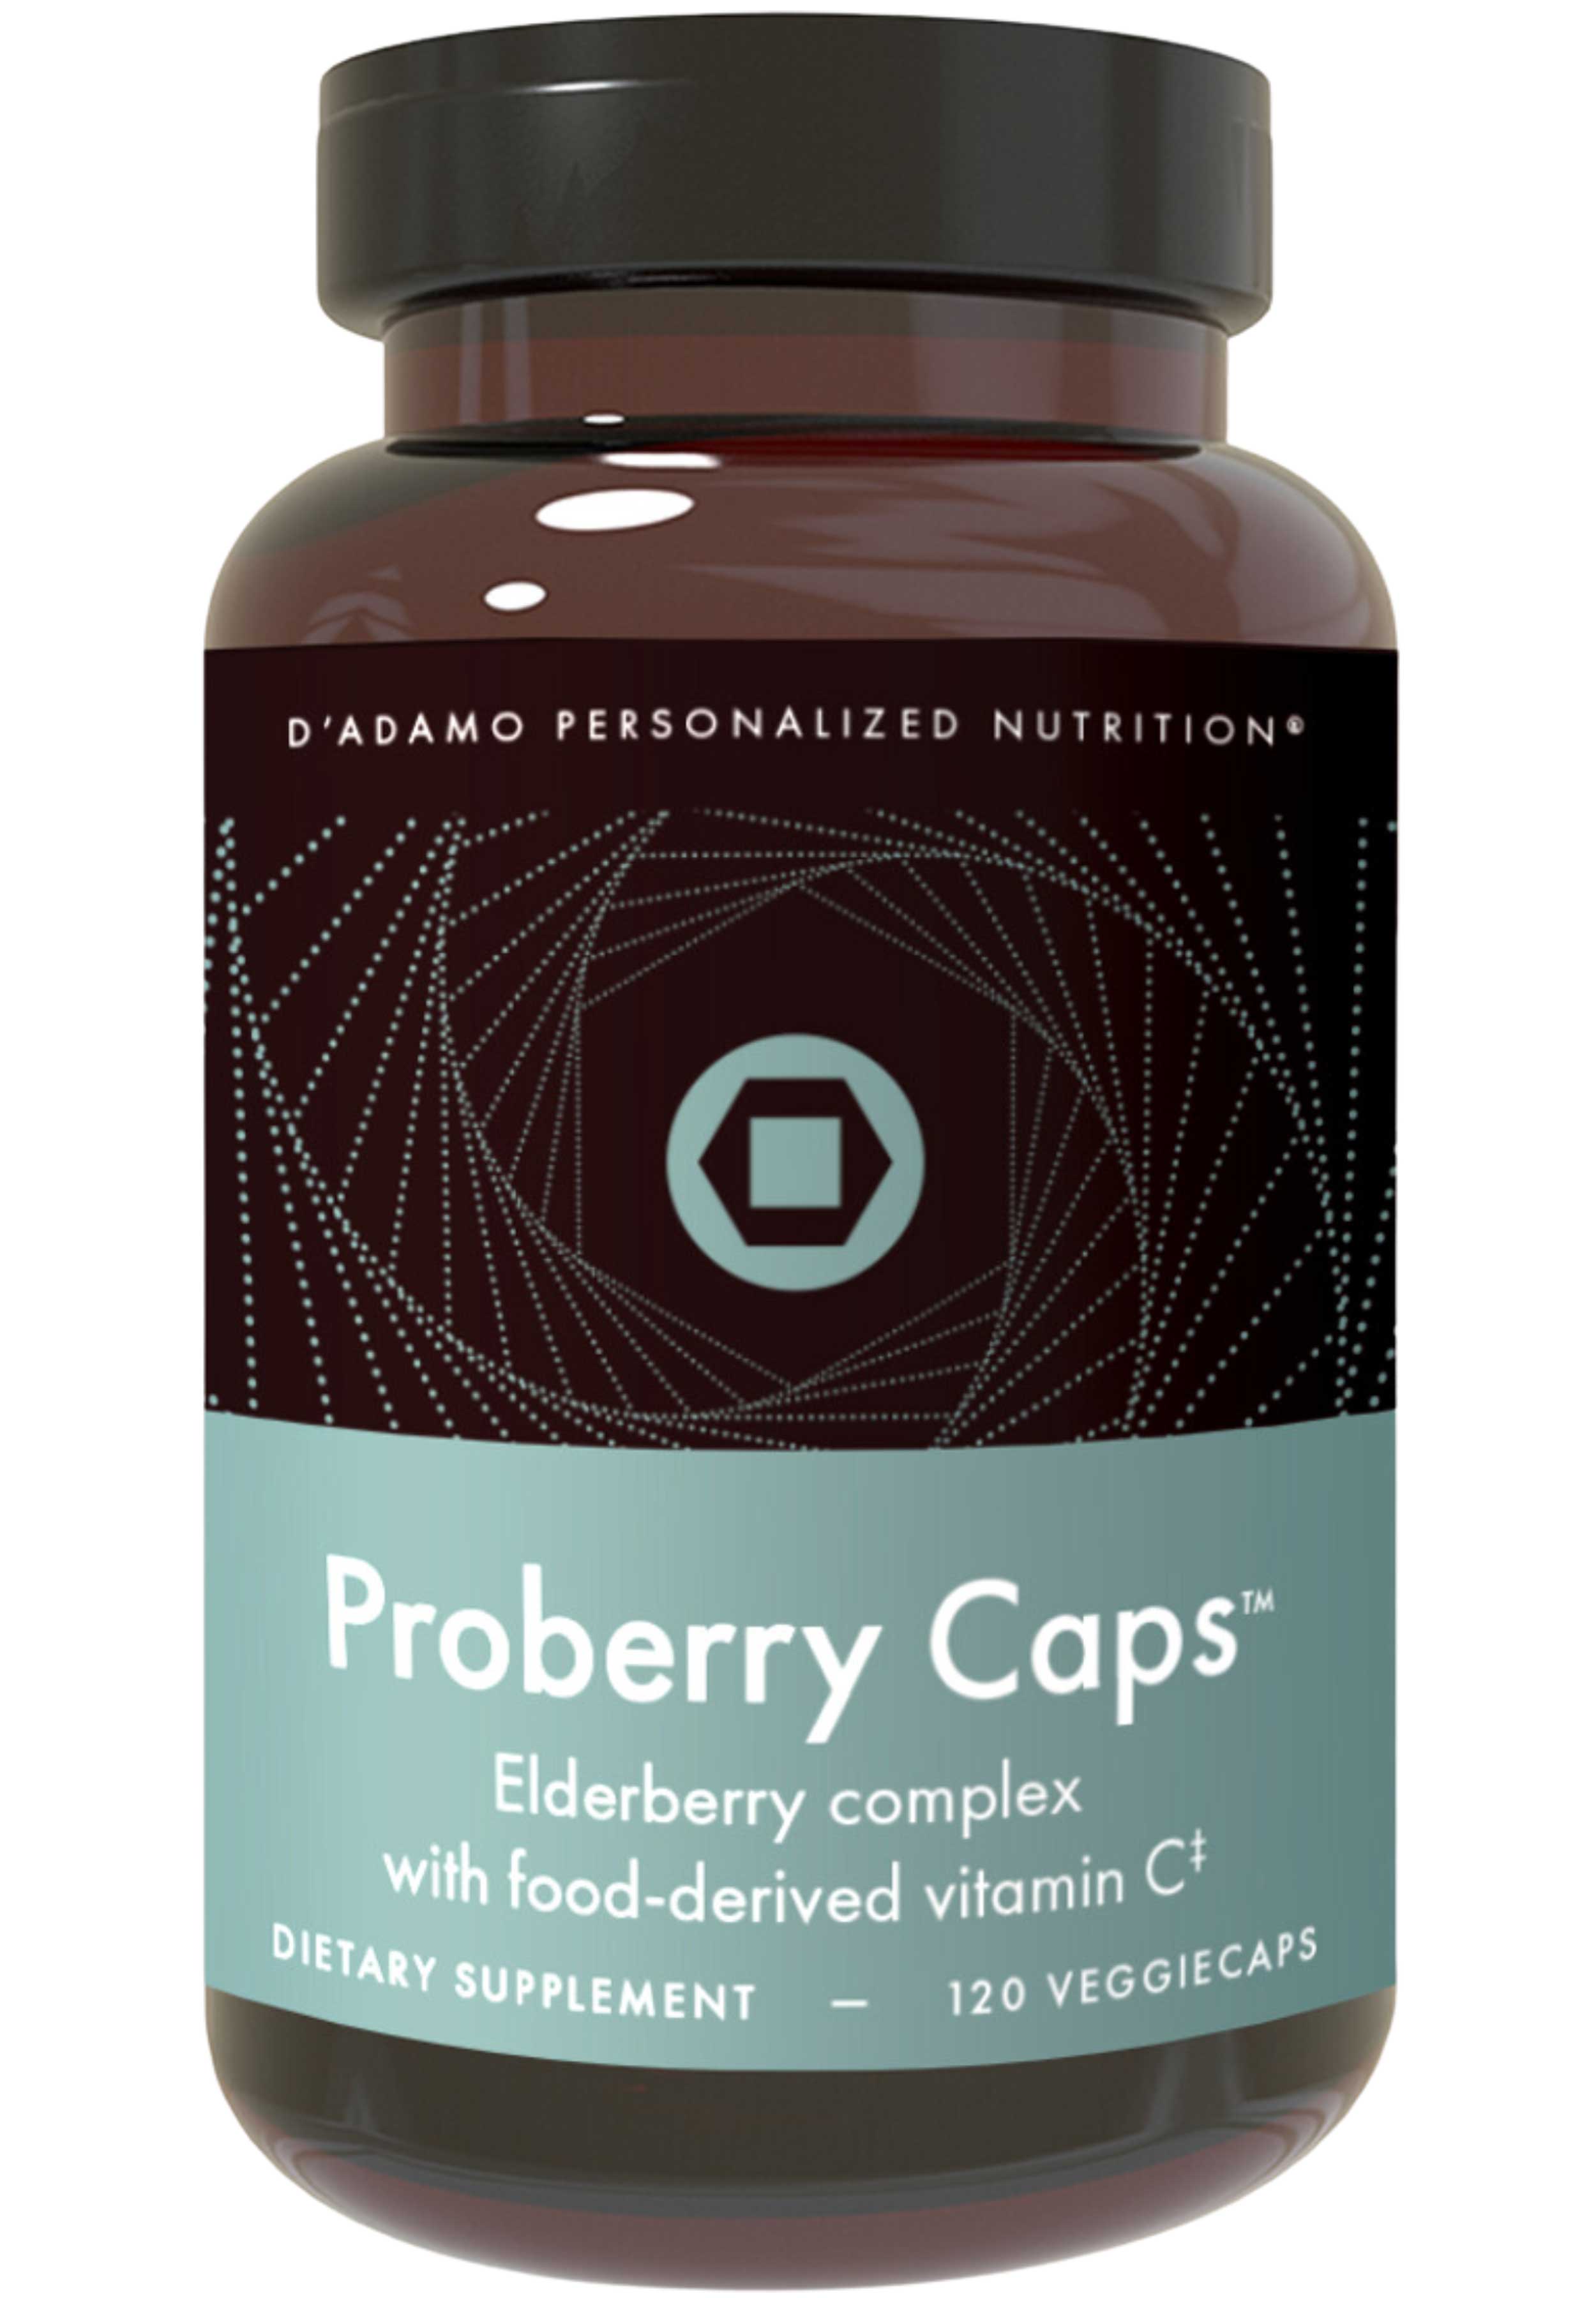 D'Adamo Personalized Nutrition Proberry Caps